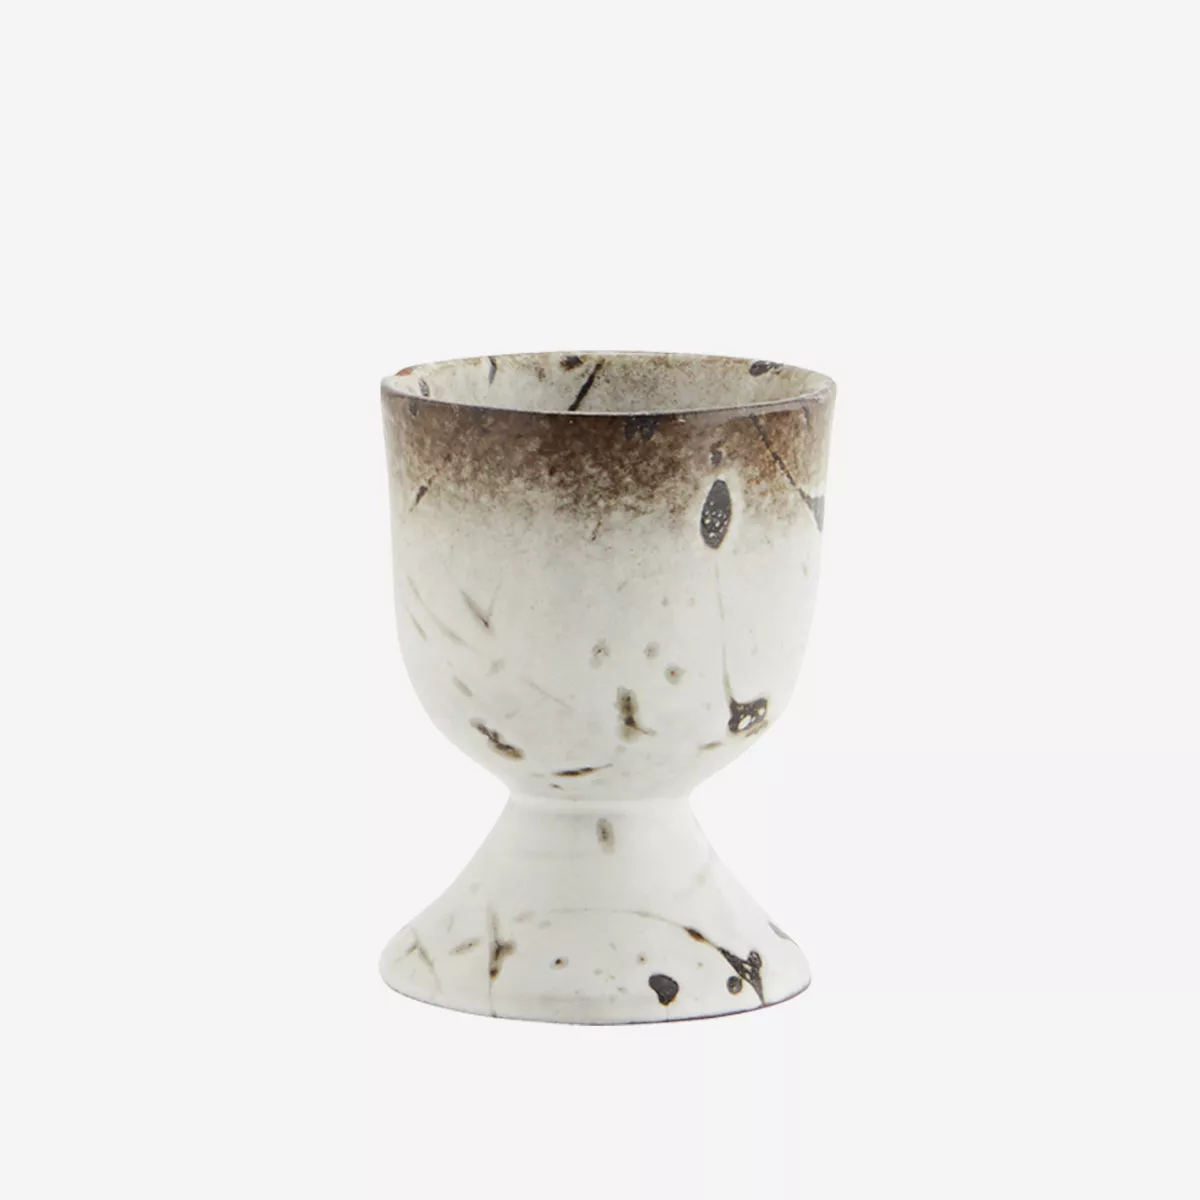 Speckled Ceramic Egg Cup